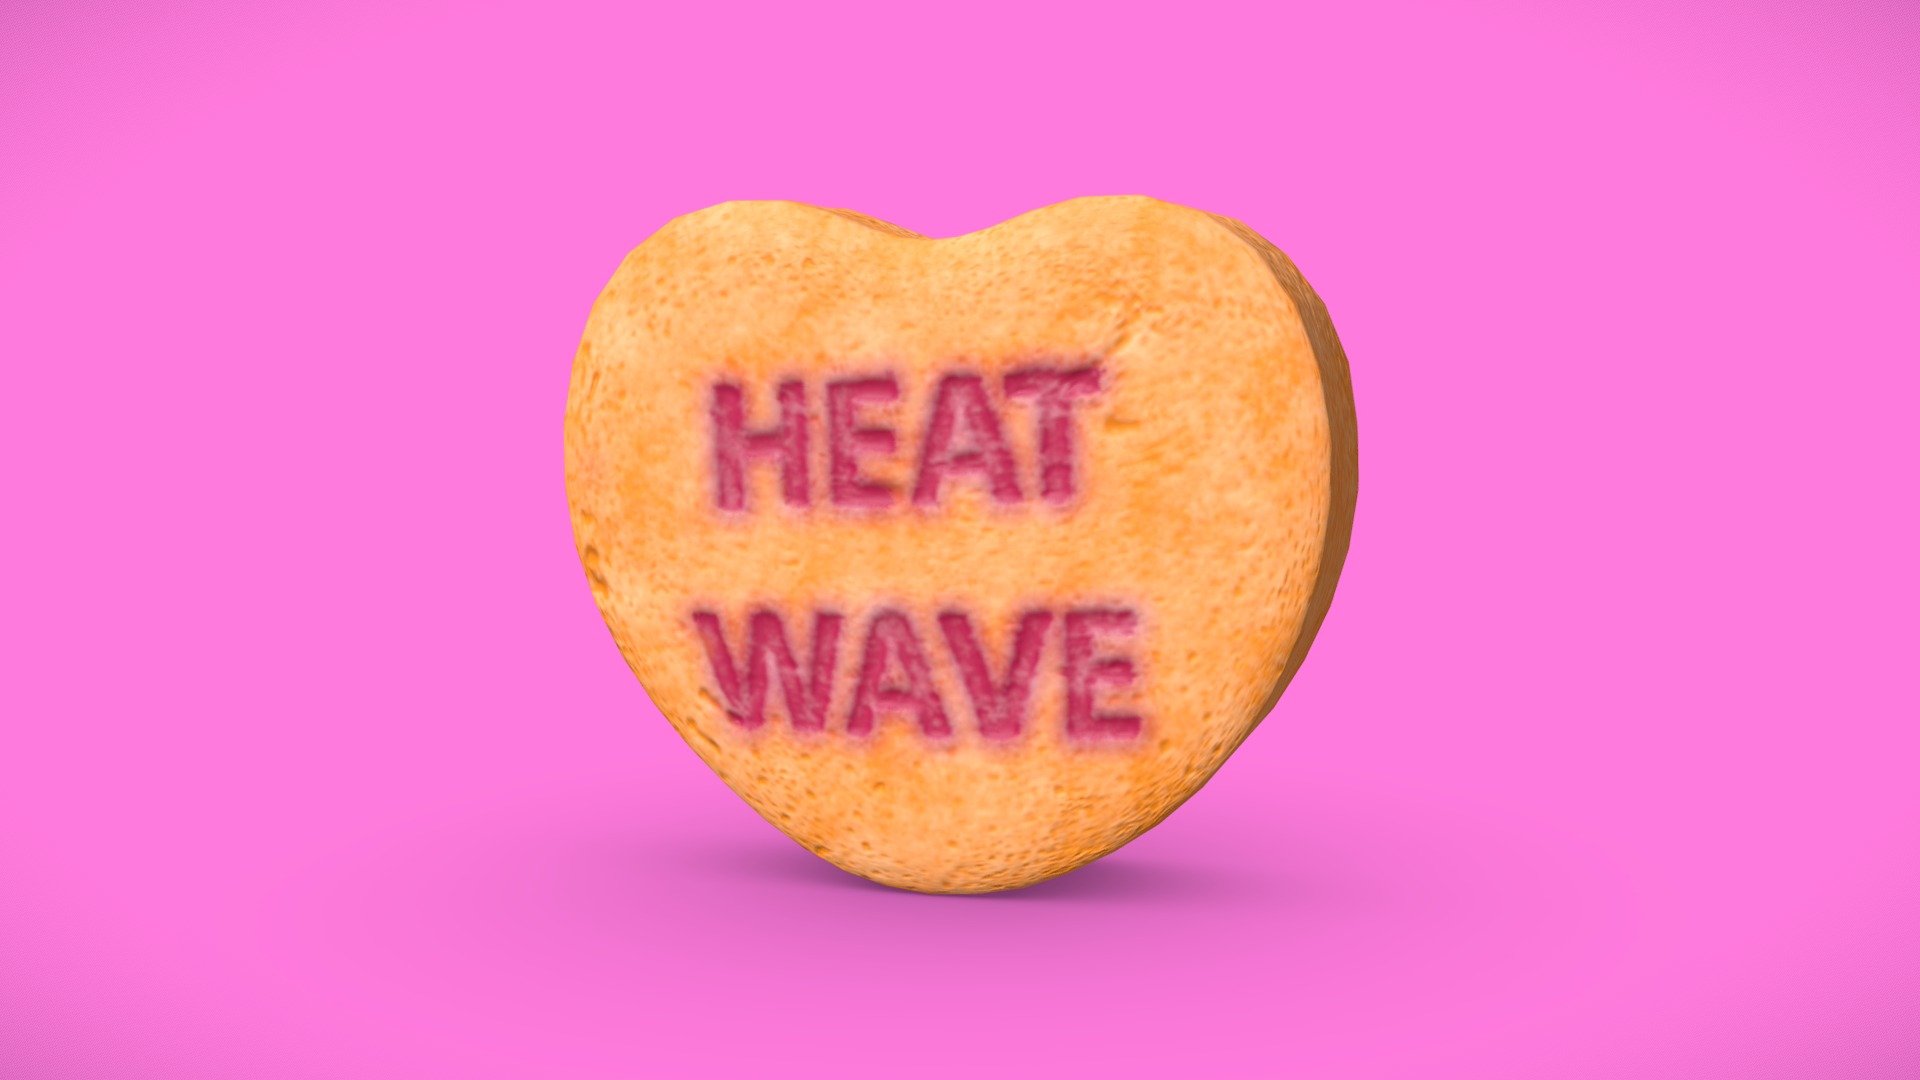 Heart Candy - Heat Wave